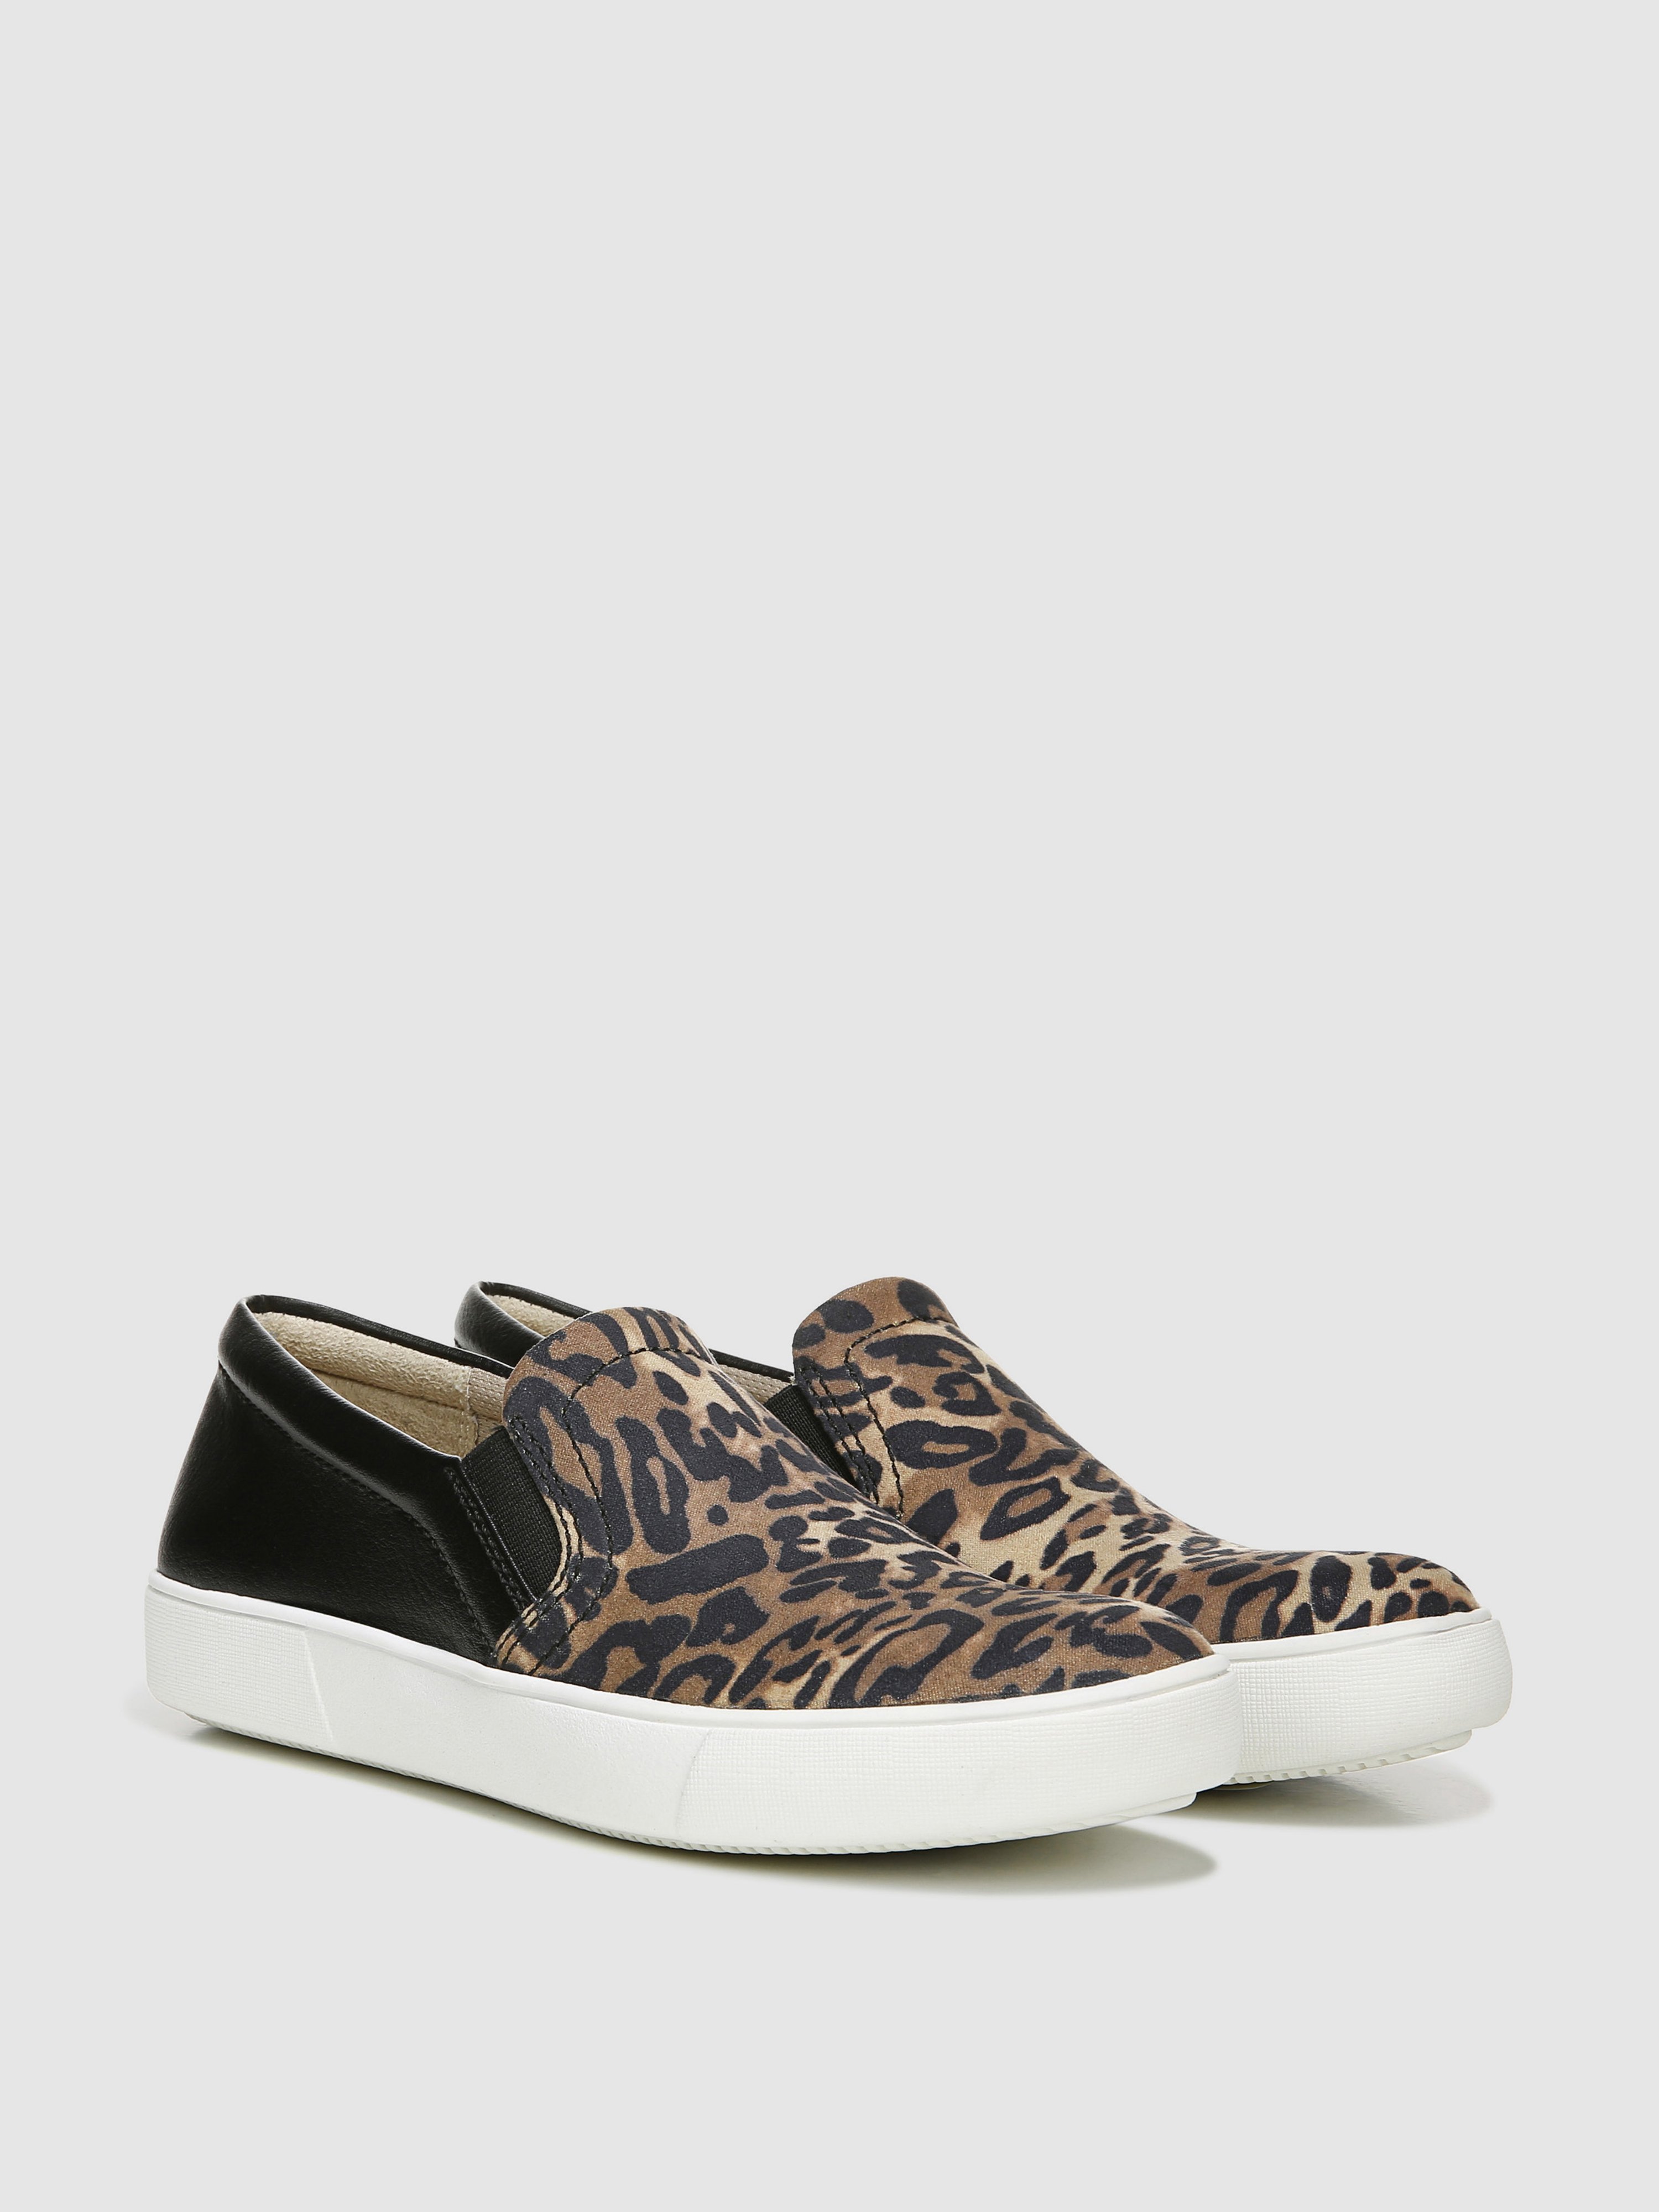 Naturalizer Marianne Luxe Slip On Sneaker In Brown/black Cheetah